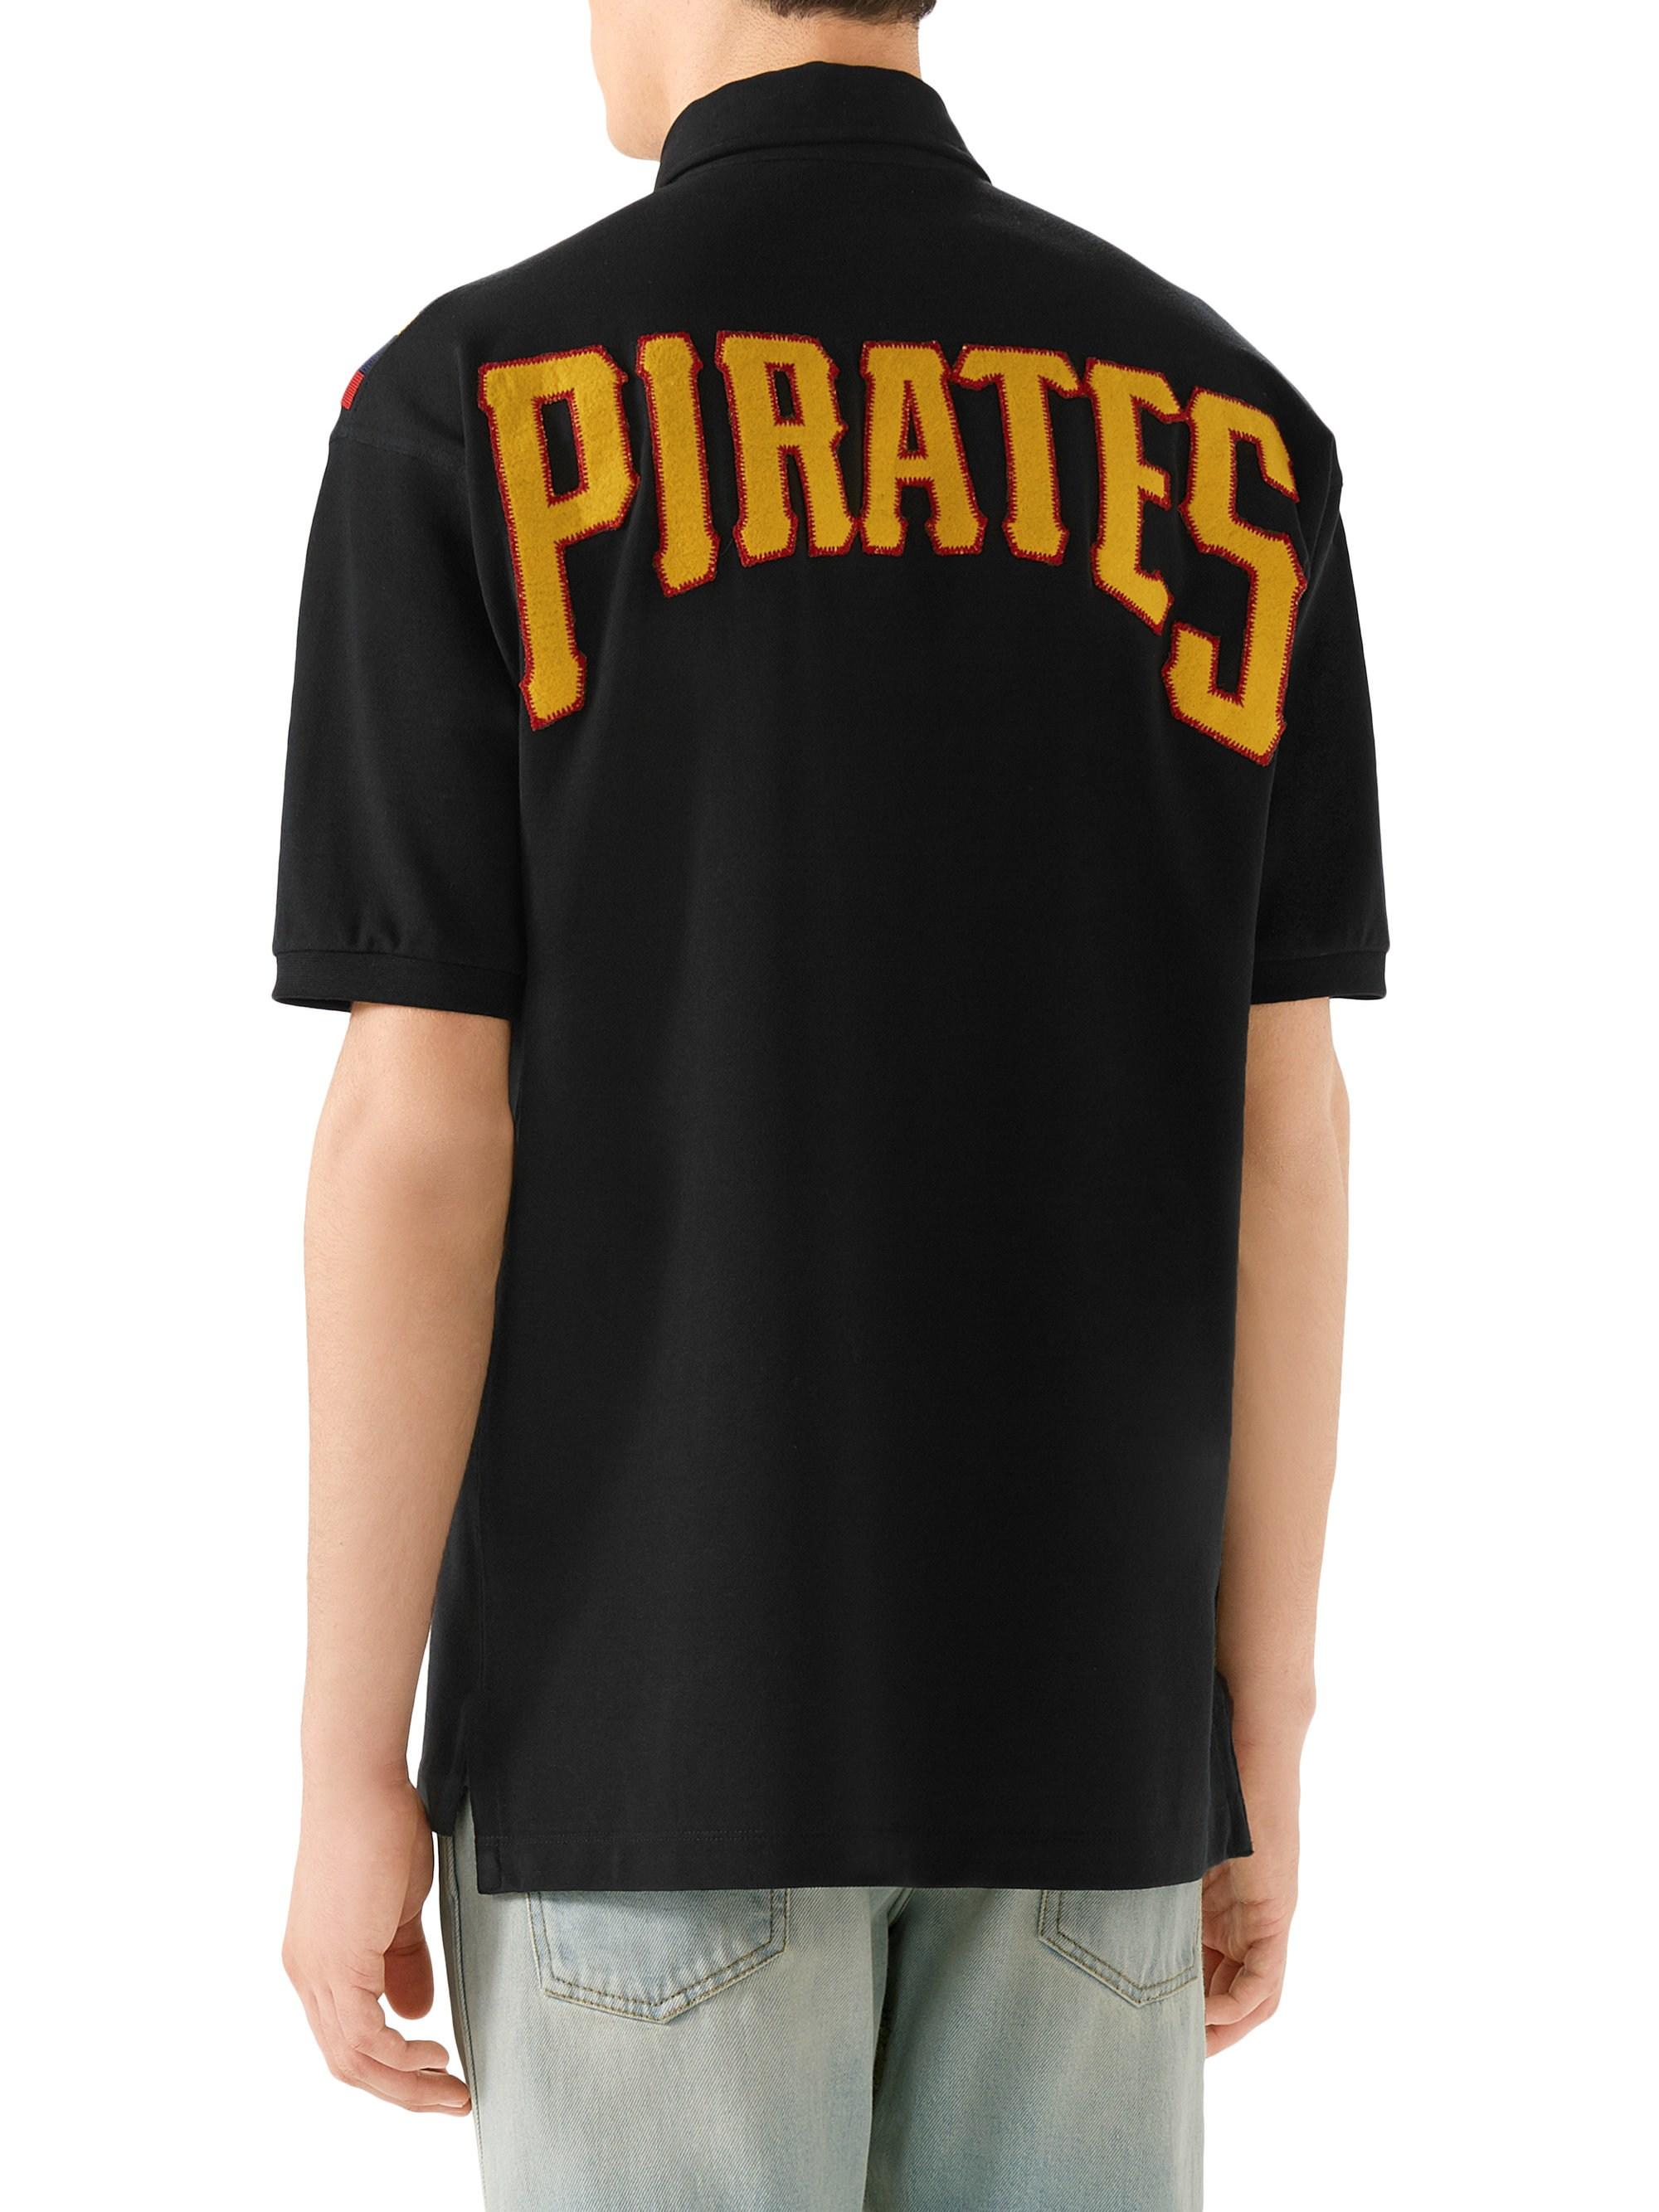 gucci pirate shirt